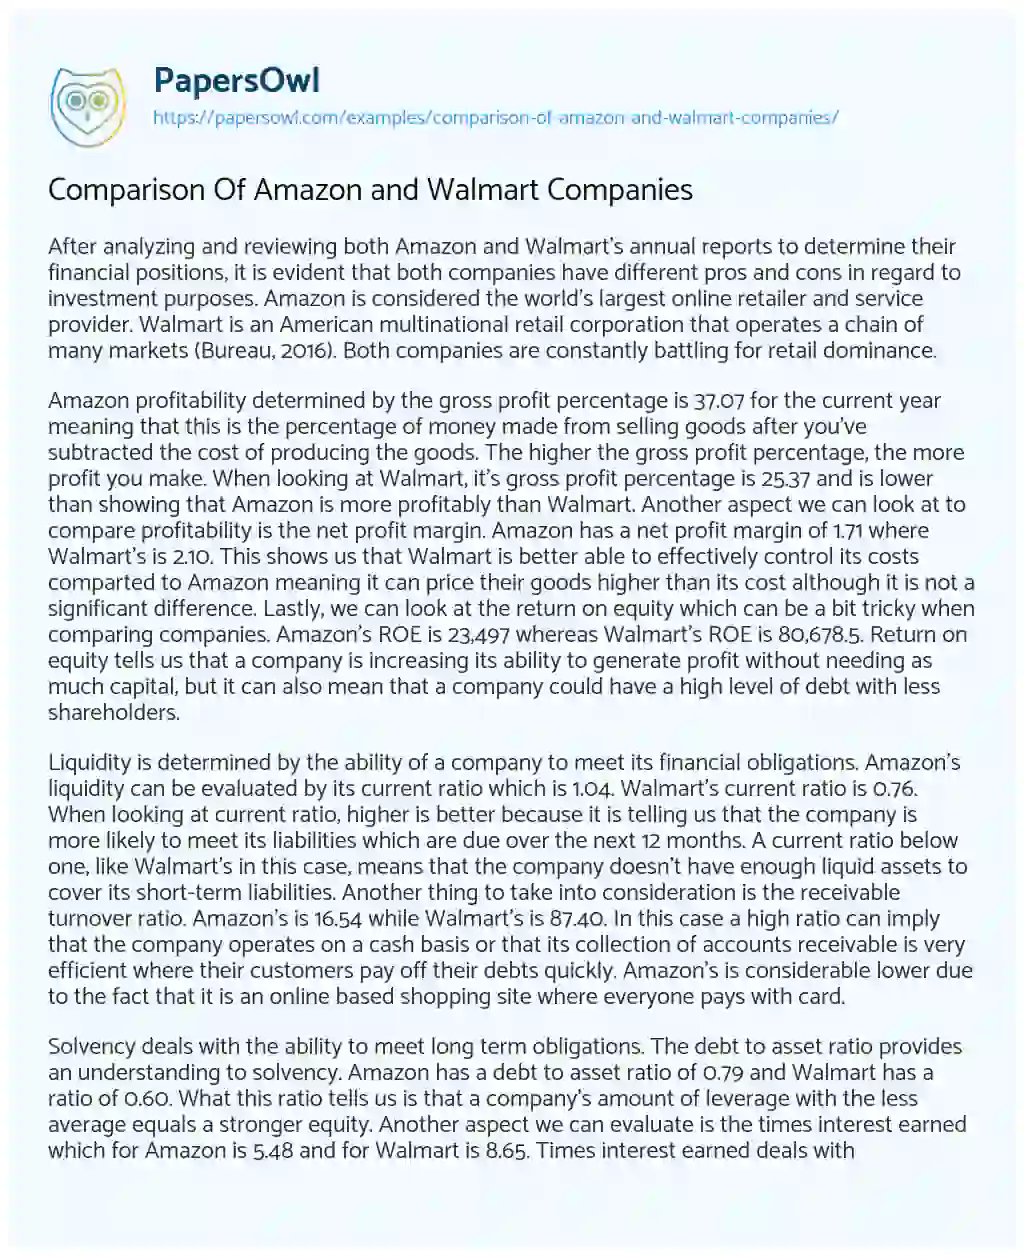 Essay on Comparison of Amazon and Walmart Companies